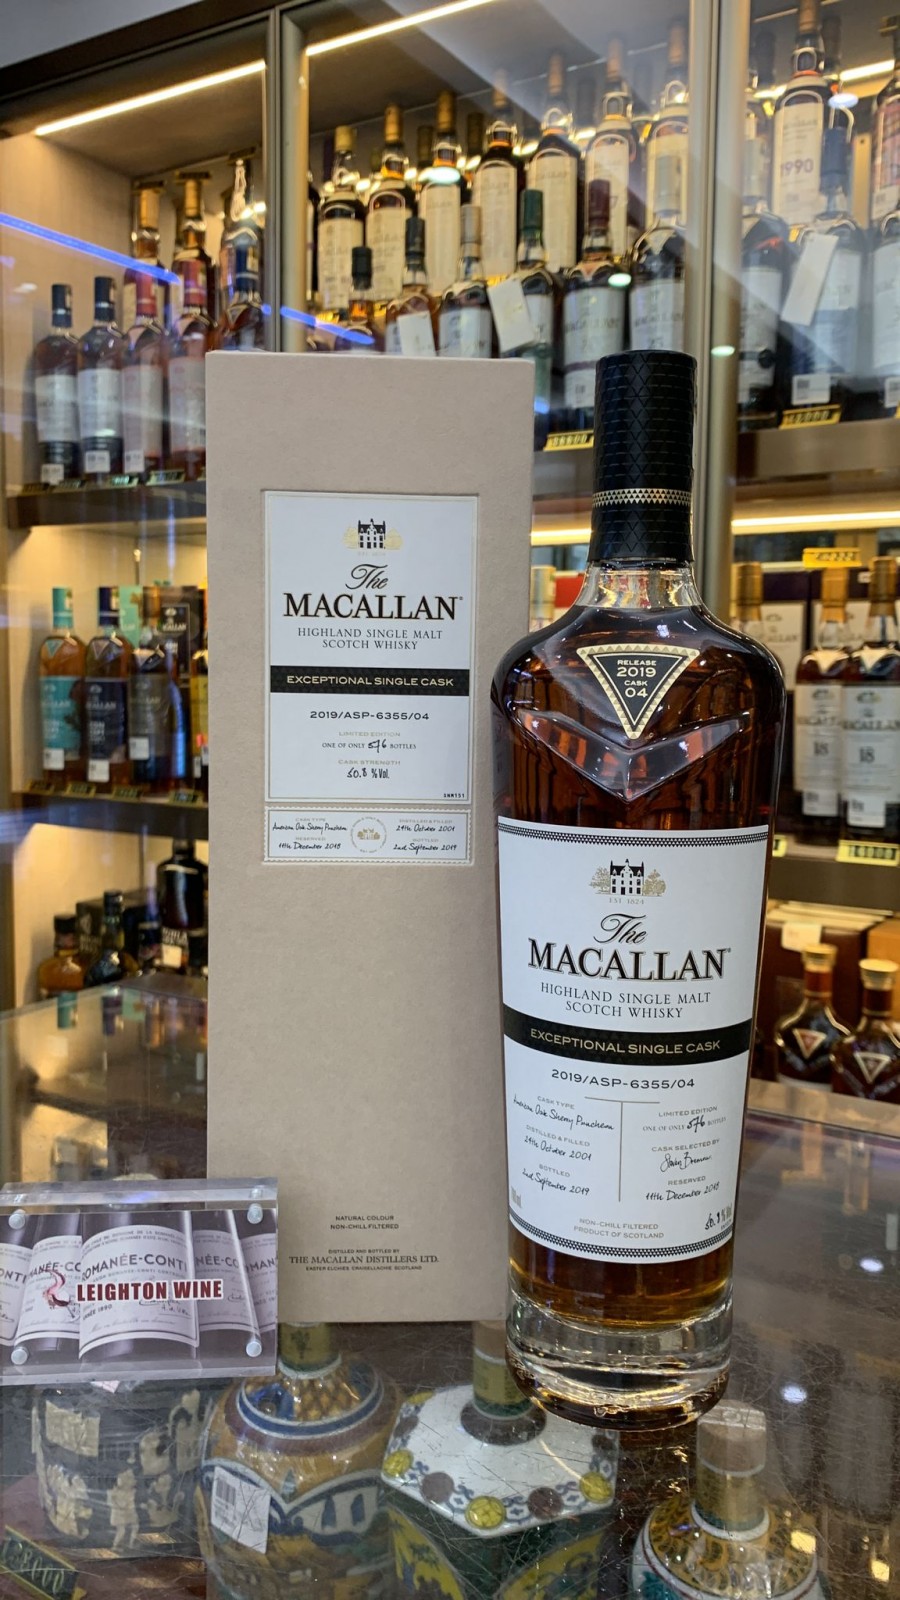 Macallan Exceptional Single Cask 2019/ASP – 6355/04